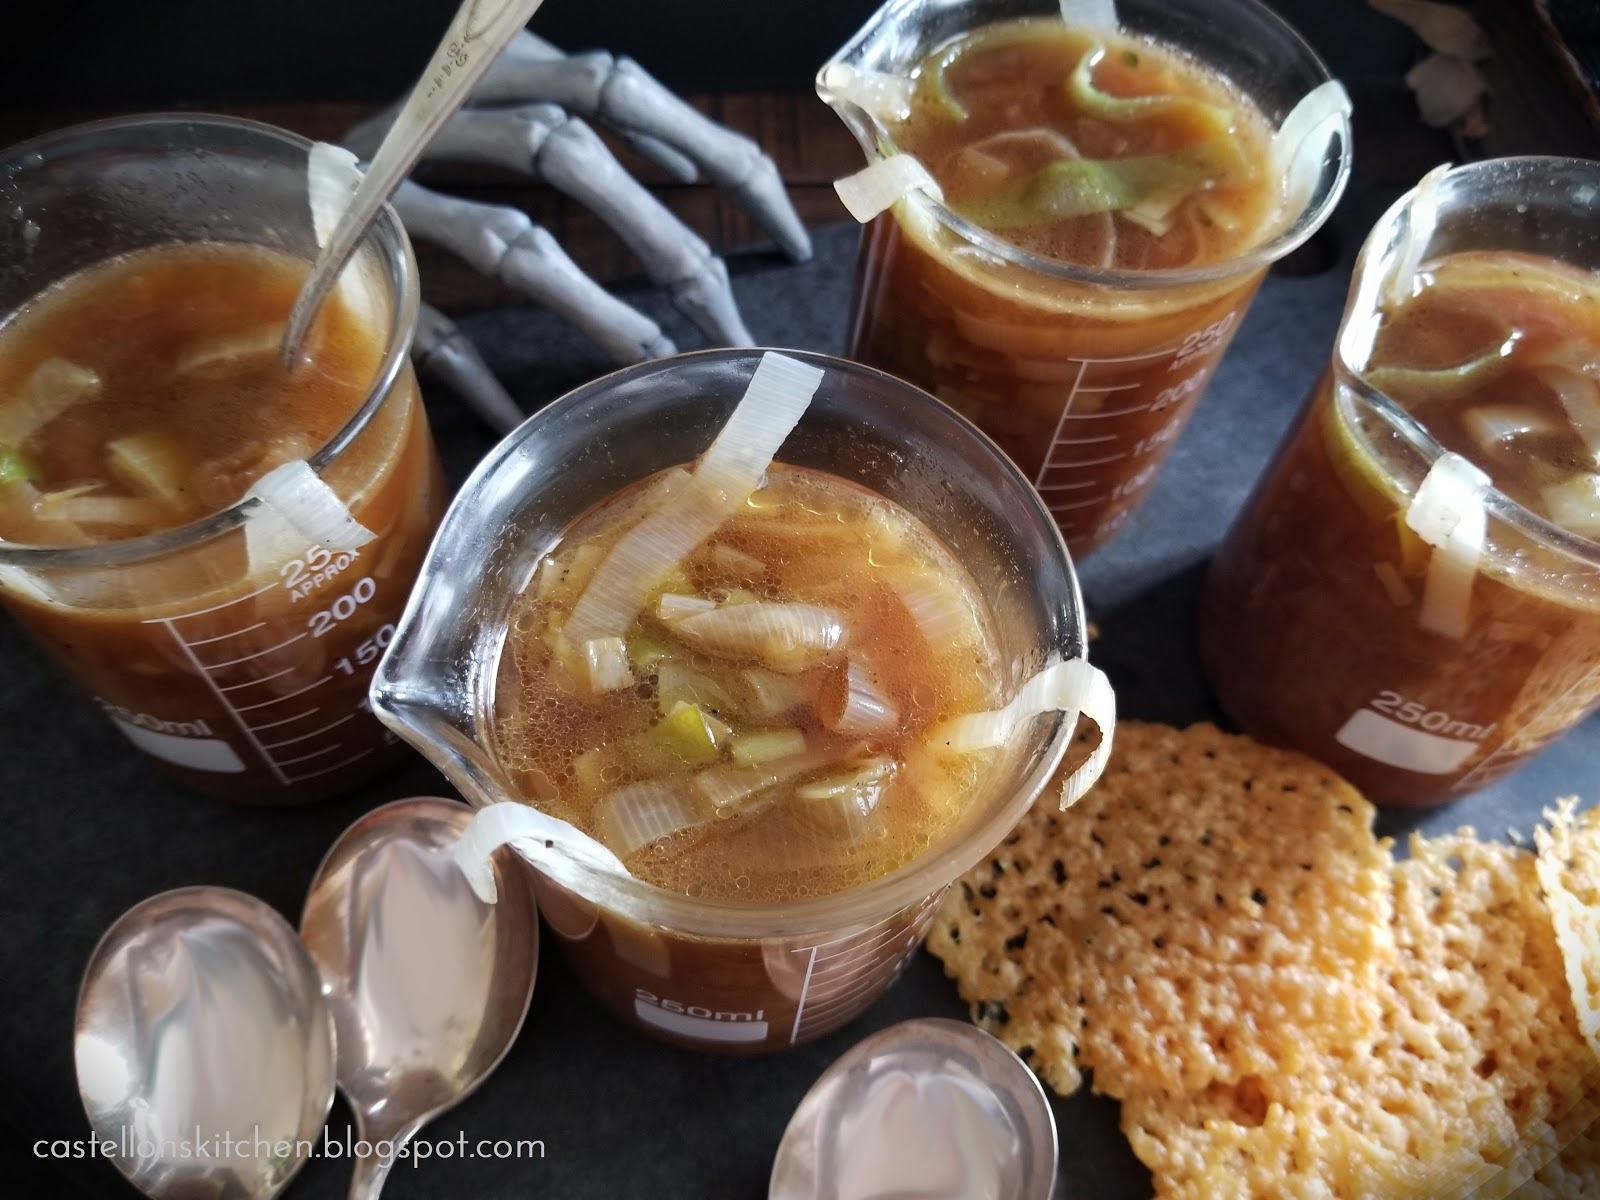 Castellon's Kitchen: Vampire Slayer Soup (Roasted Garlic Sweet Potato Soup)